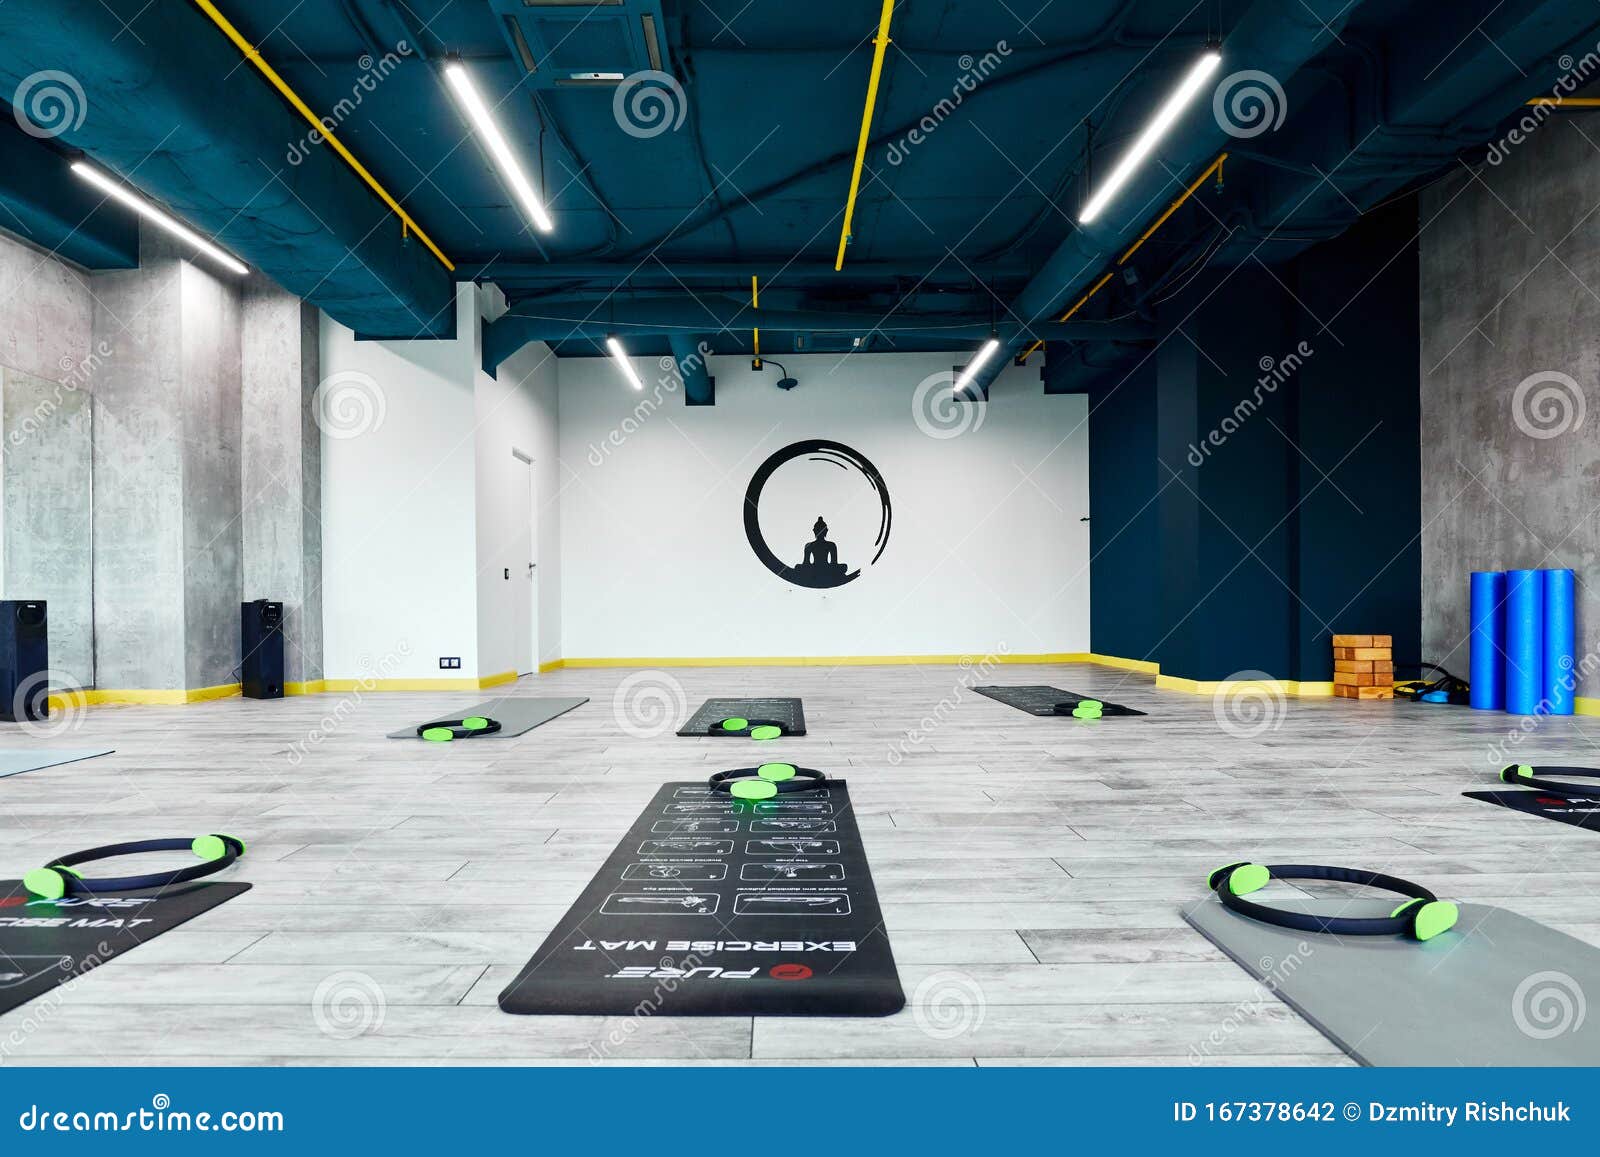 fitness room mats